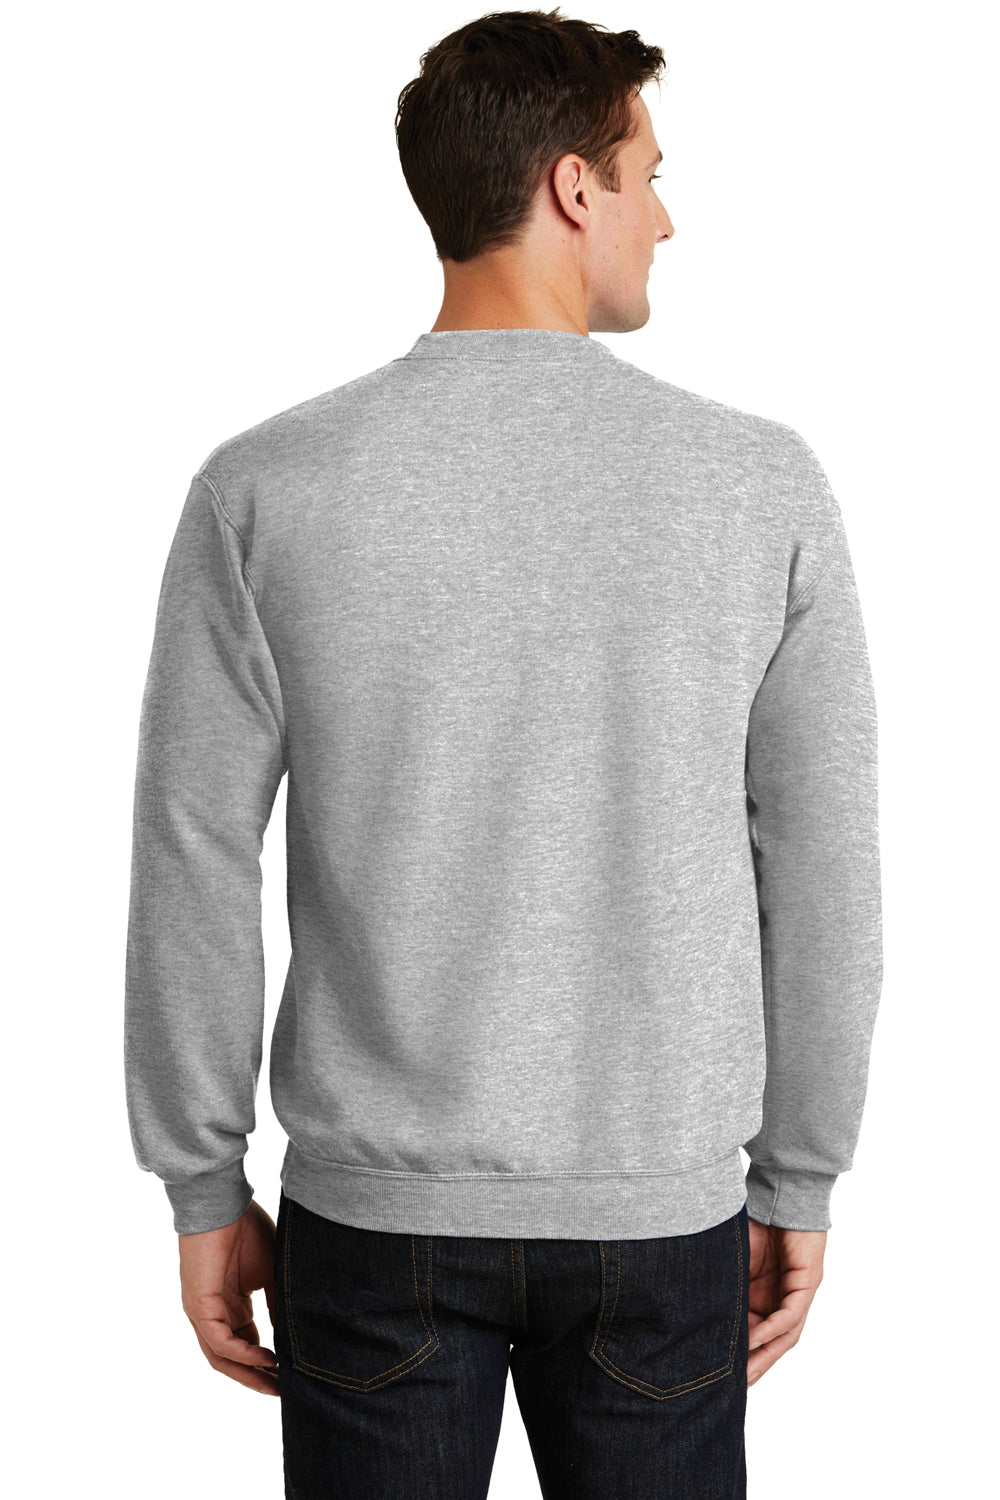 Port & Company PC78 Mens Core Fleece Crewneck Sweatshirt Ash Grey Back